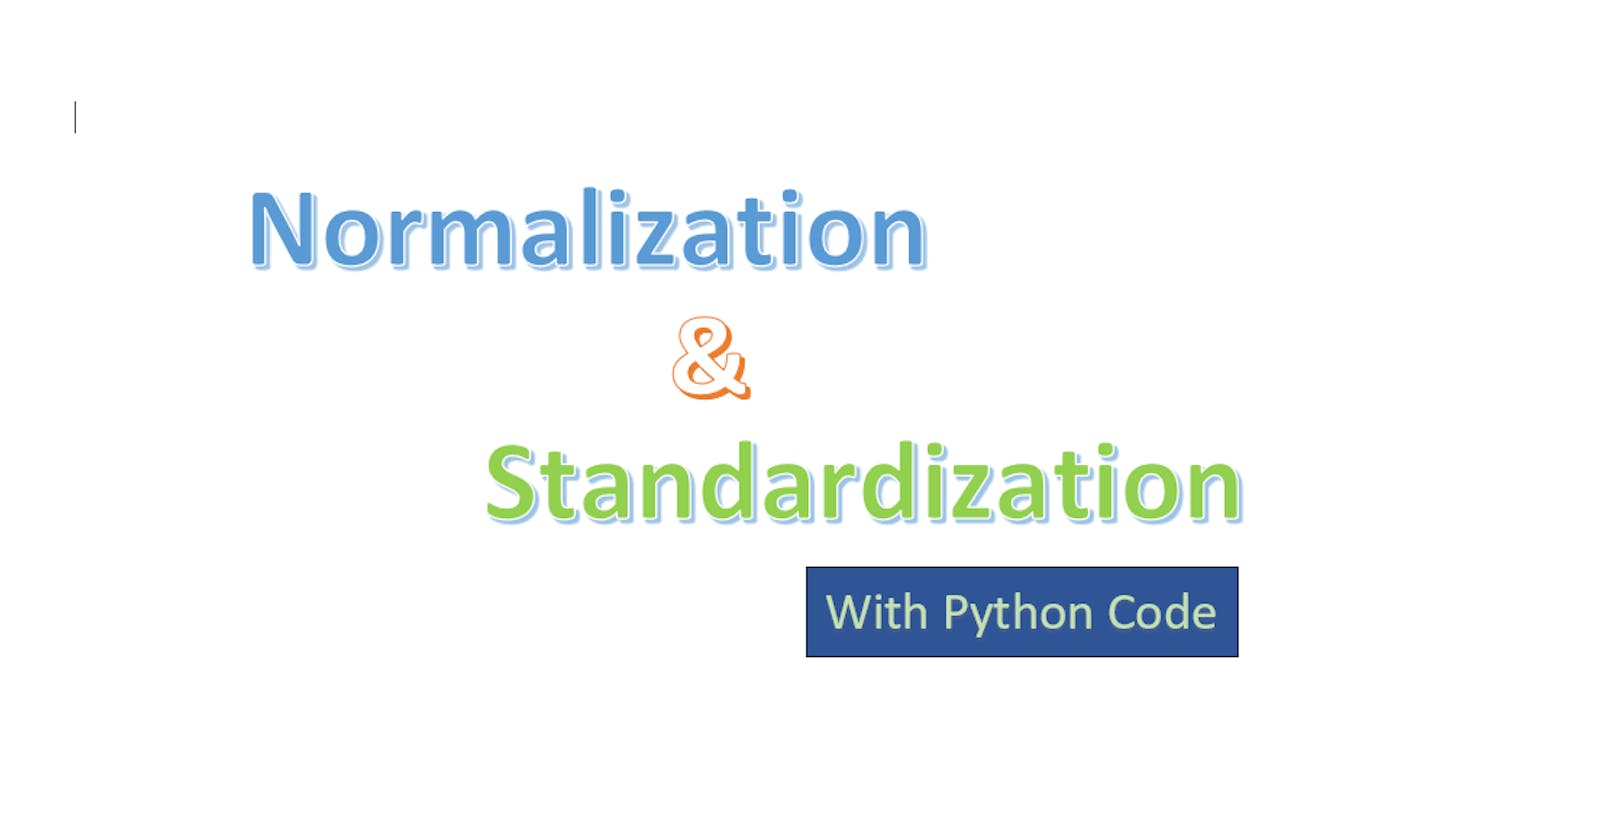 Normalization and Standardization with Python Code